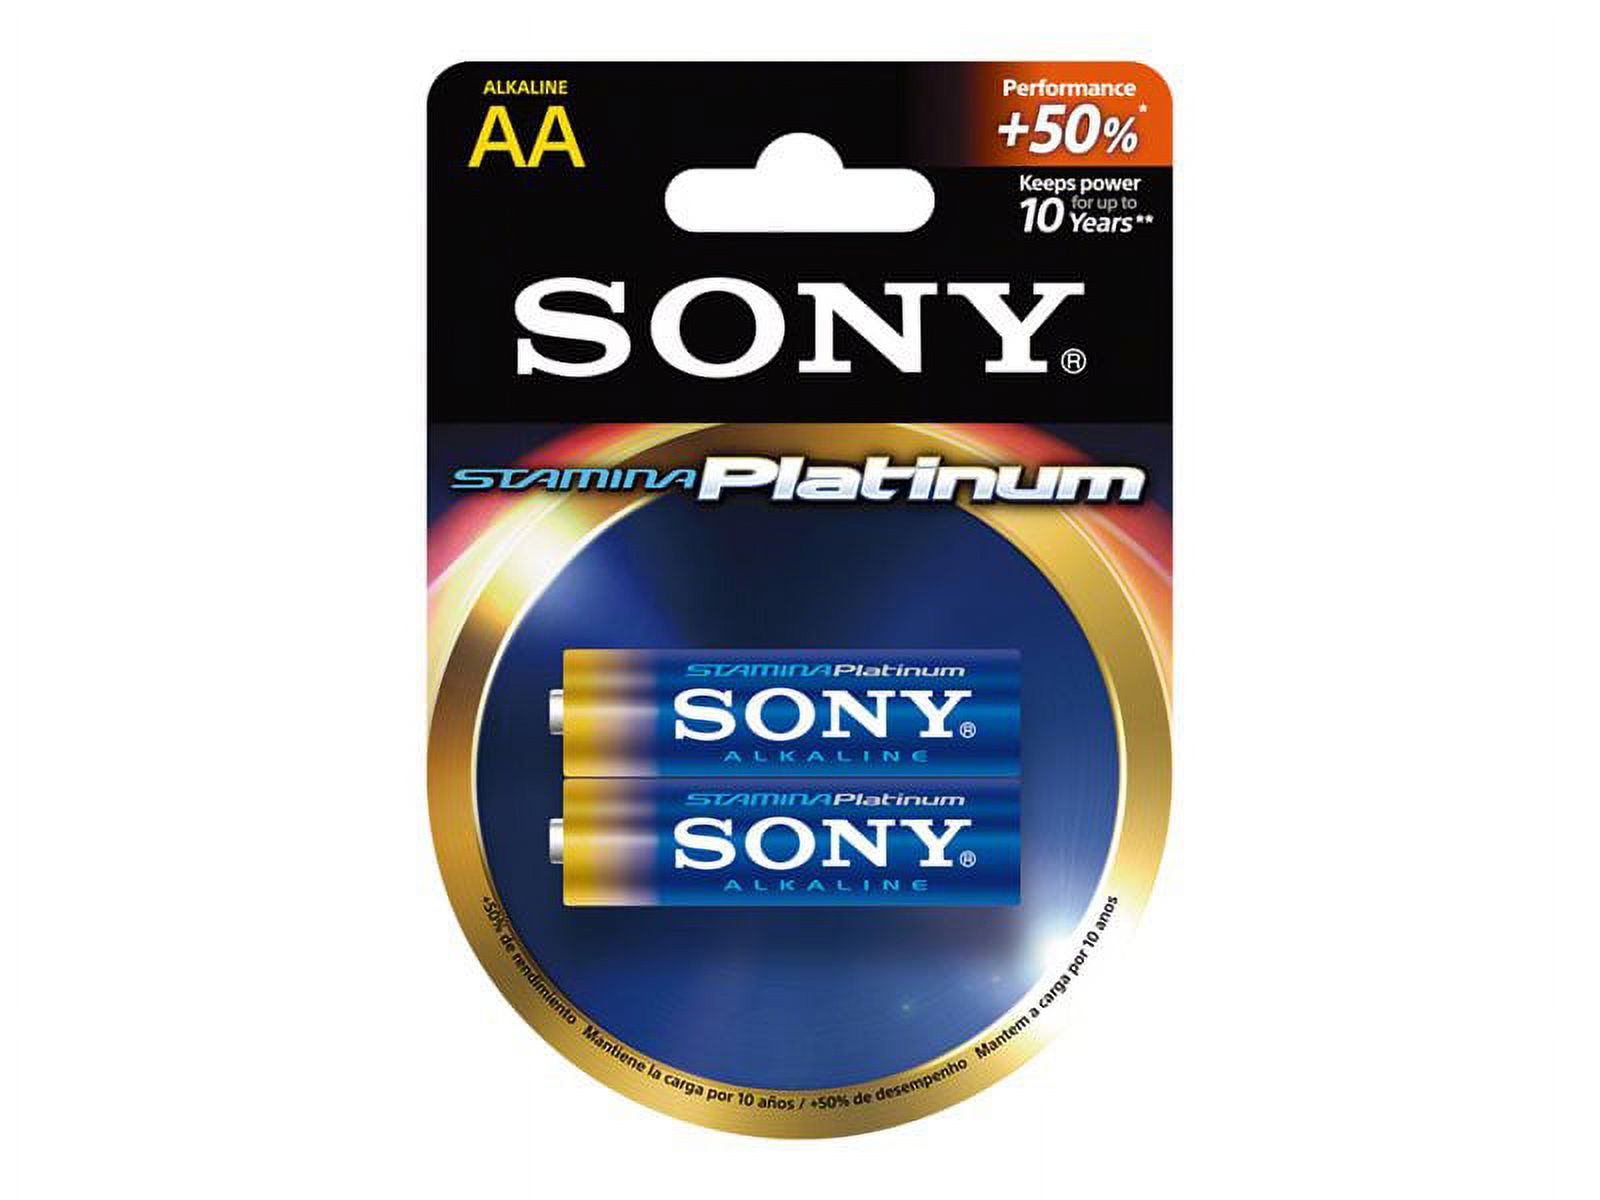 Sony Stamina Platinum AM3PT-B2D - Battery 2 x AA type - alkaline - image 5 of 10